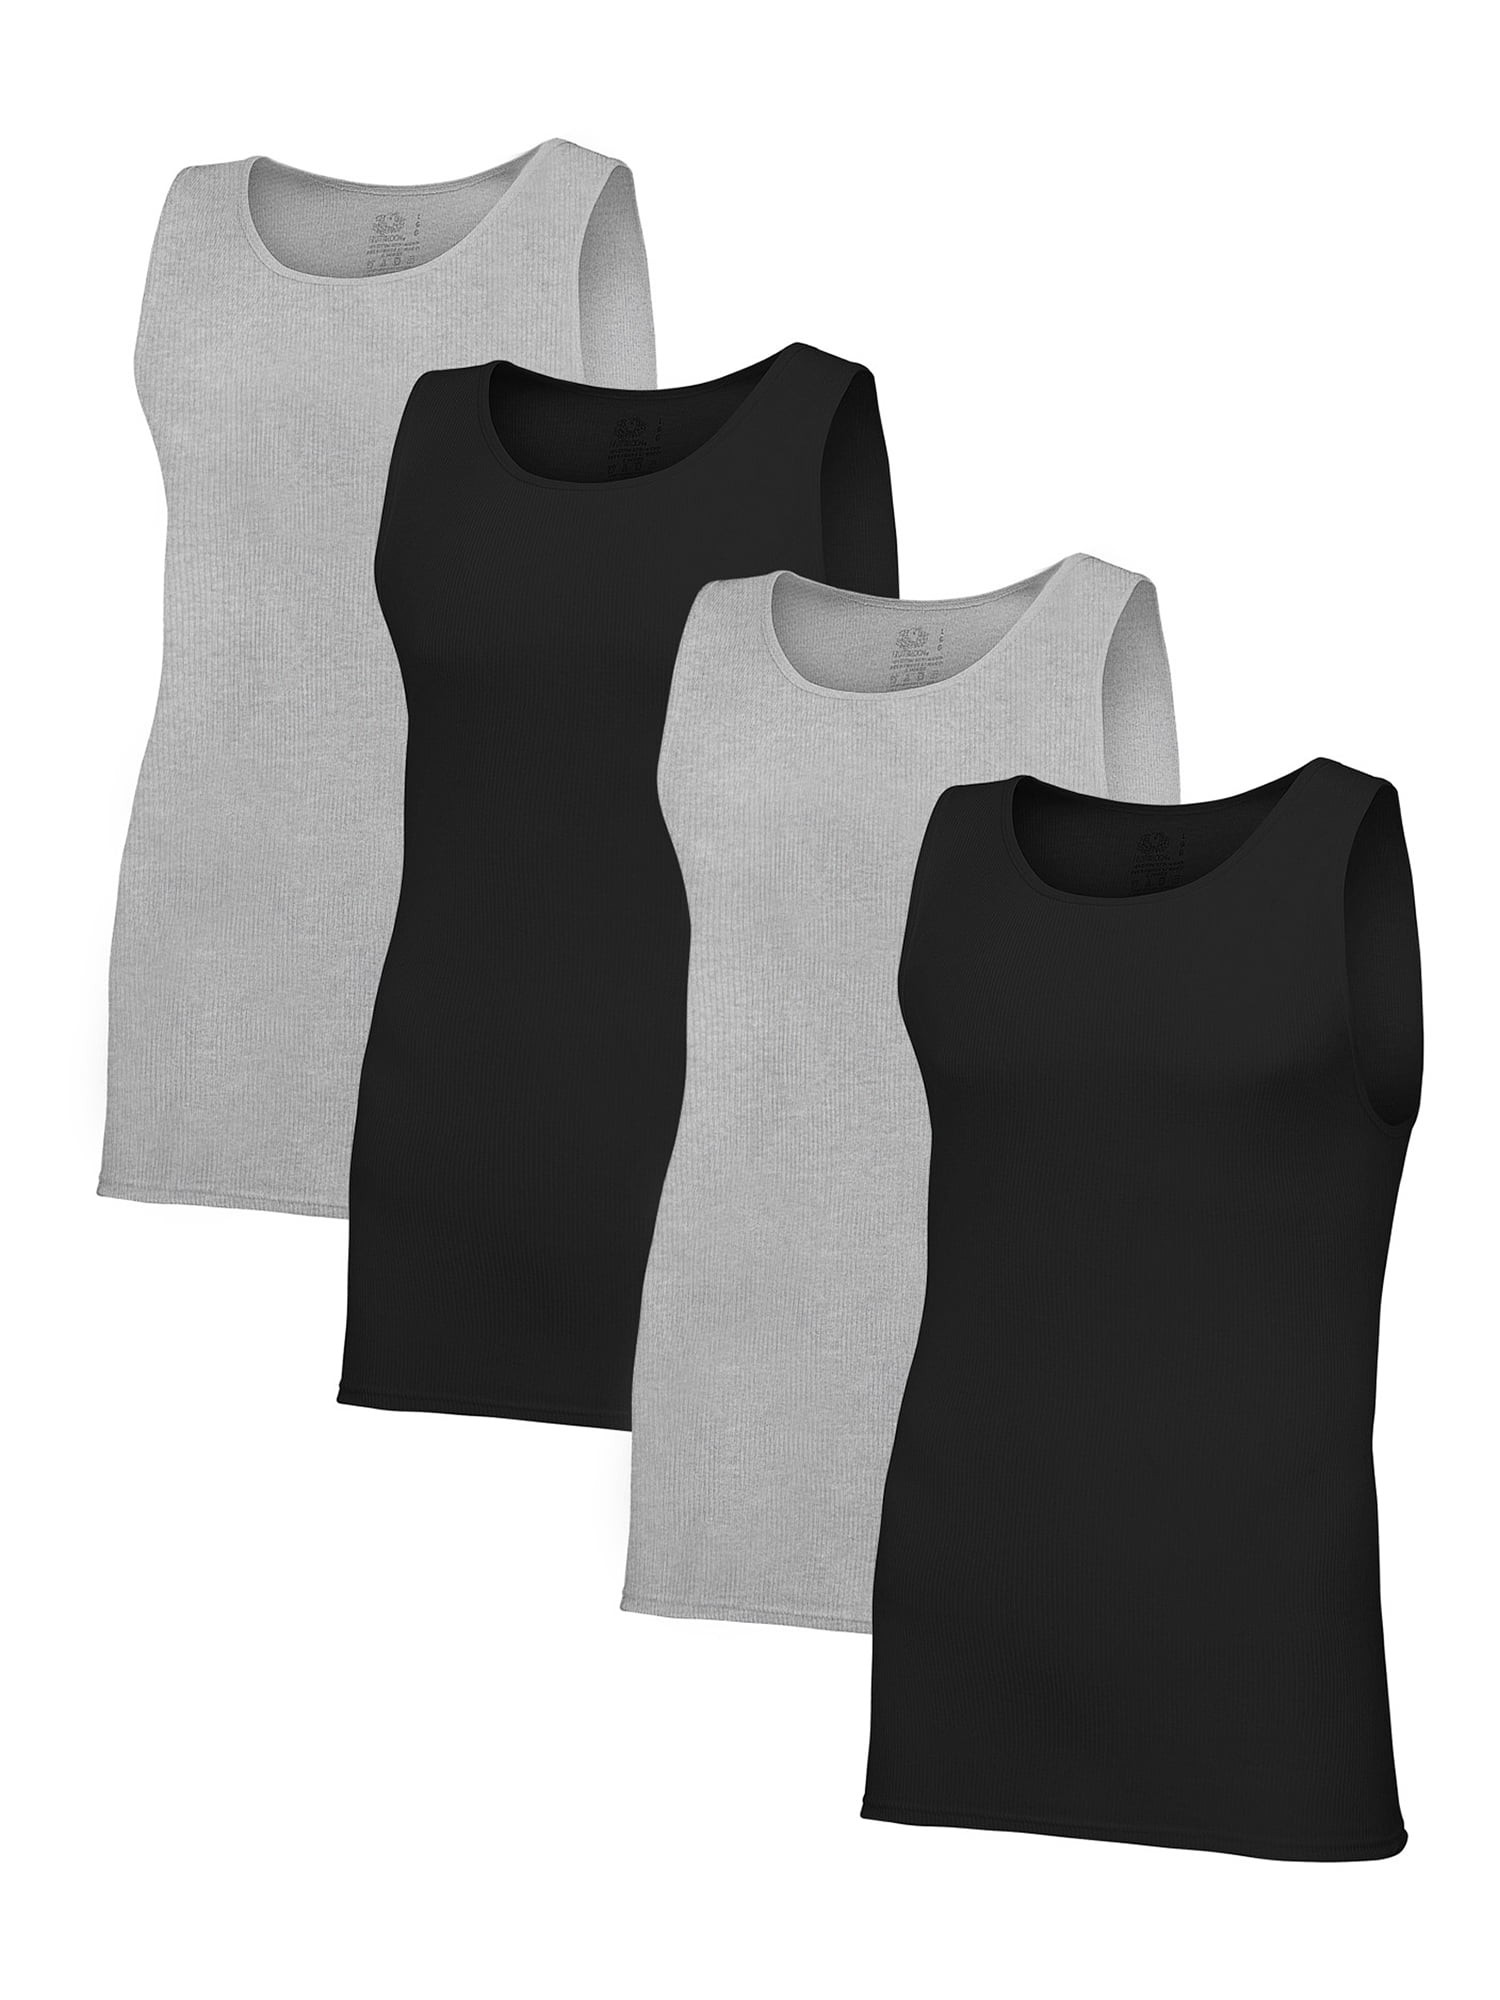 Mejores ofertas e historial de precios de Fruit of the Loom Premium Men's  Black and Gray Tank A-Shirts, 4 Pack, Sizes S-XL en